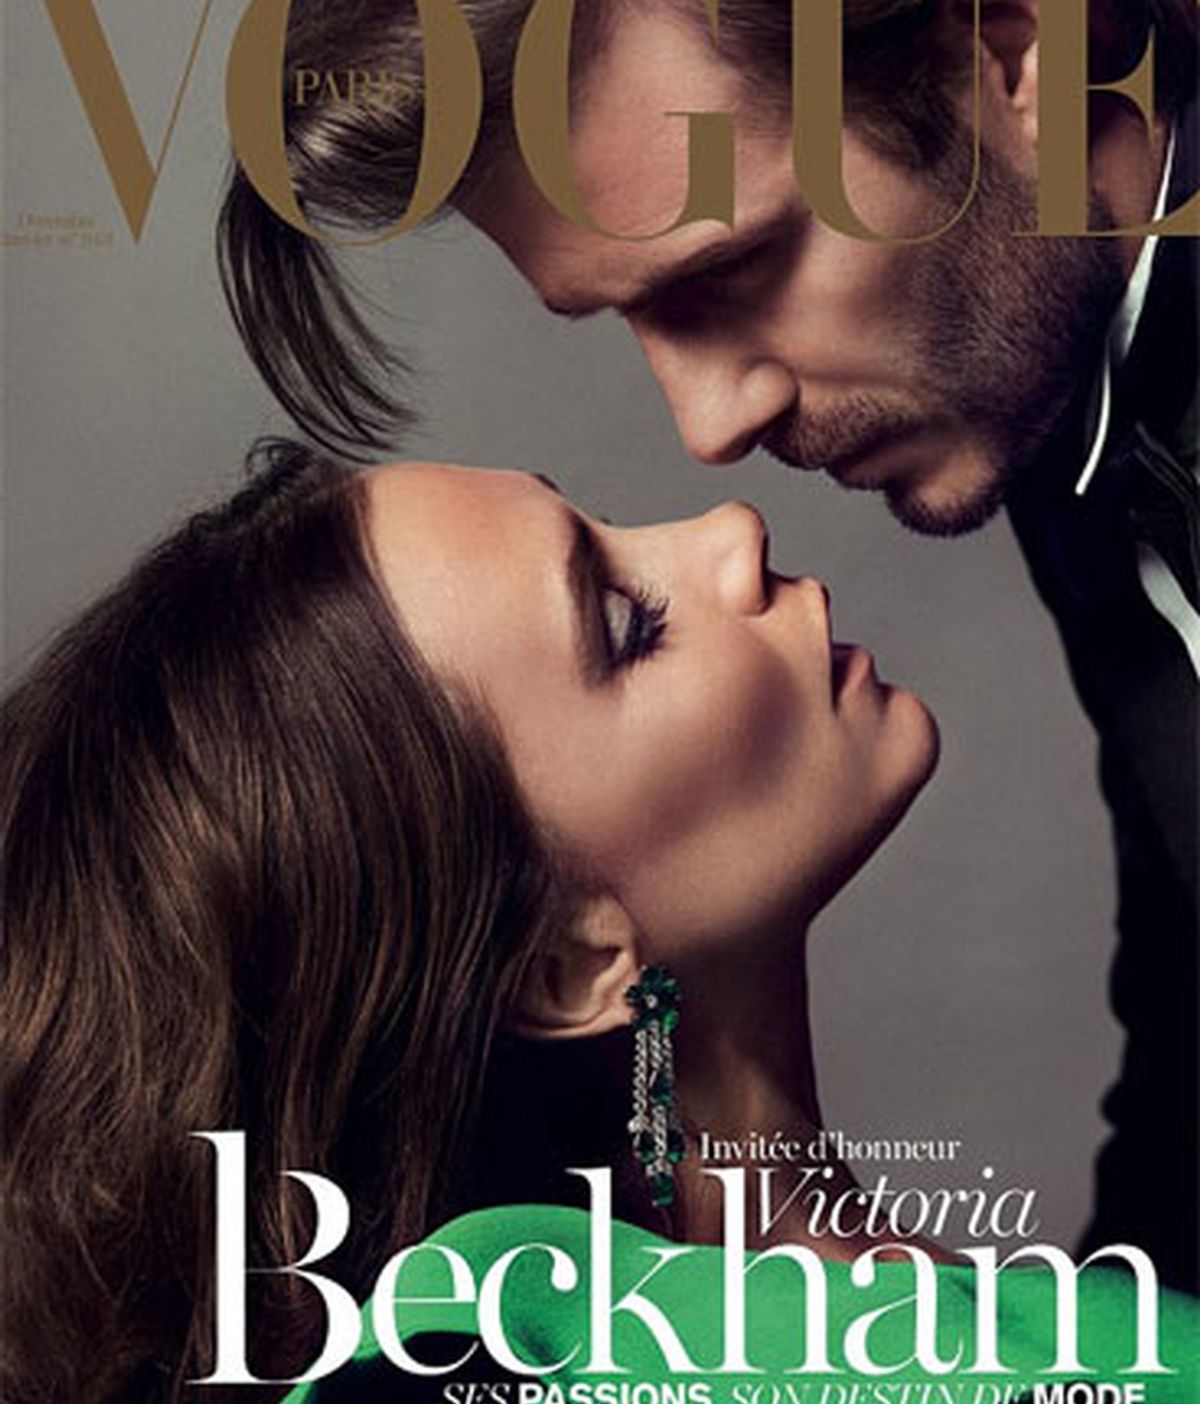 Victoria y David Beckham